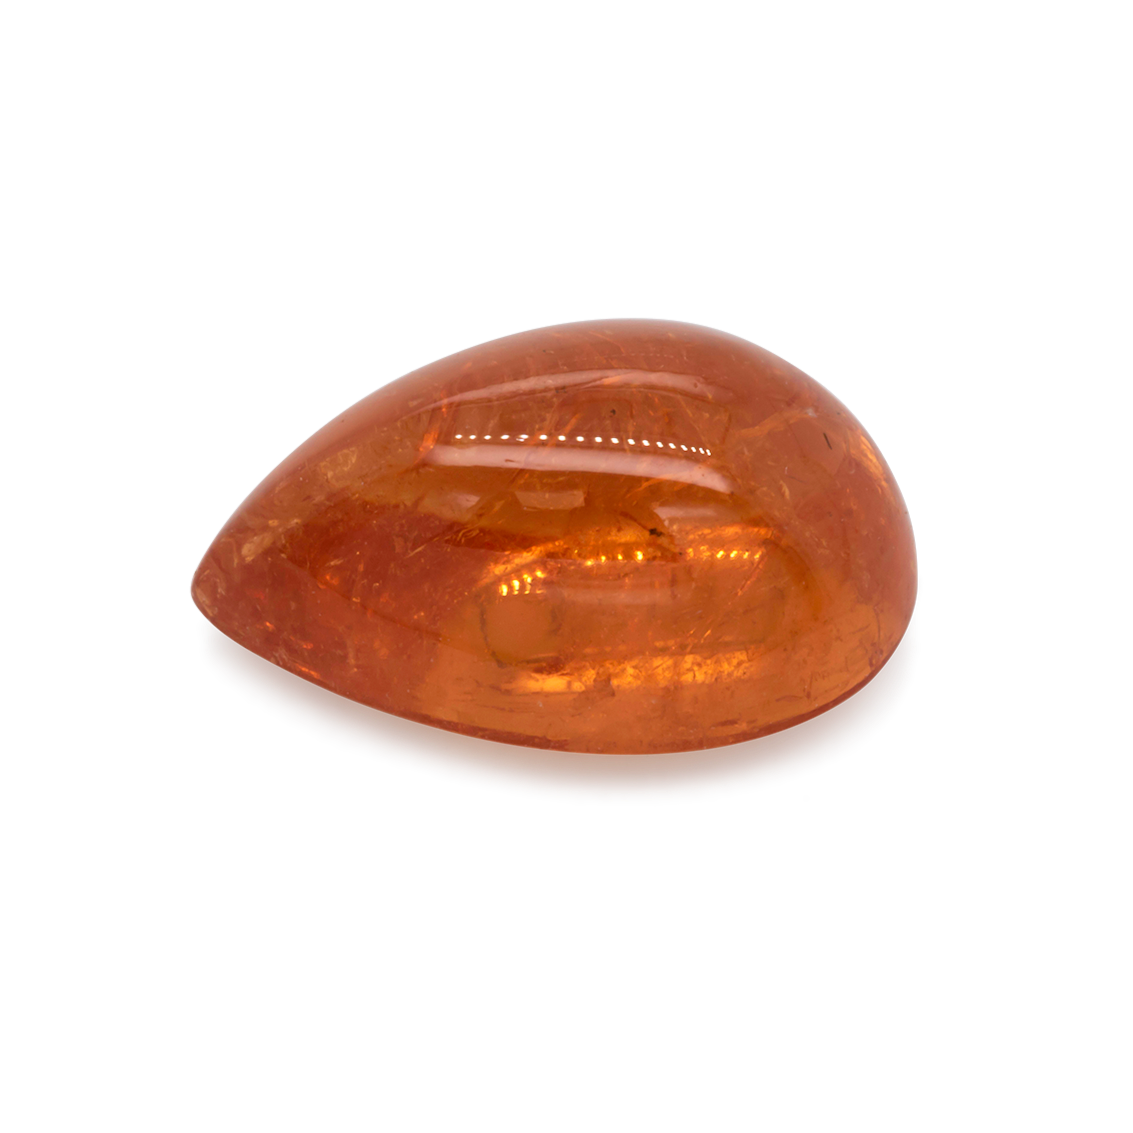 Mandarin Granat - orange, birnform, 10,3x7,1 mm, 3,50 cts, Nr. MG99042